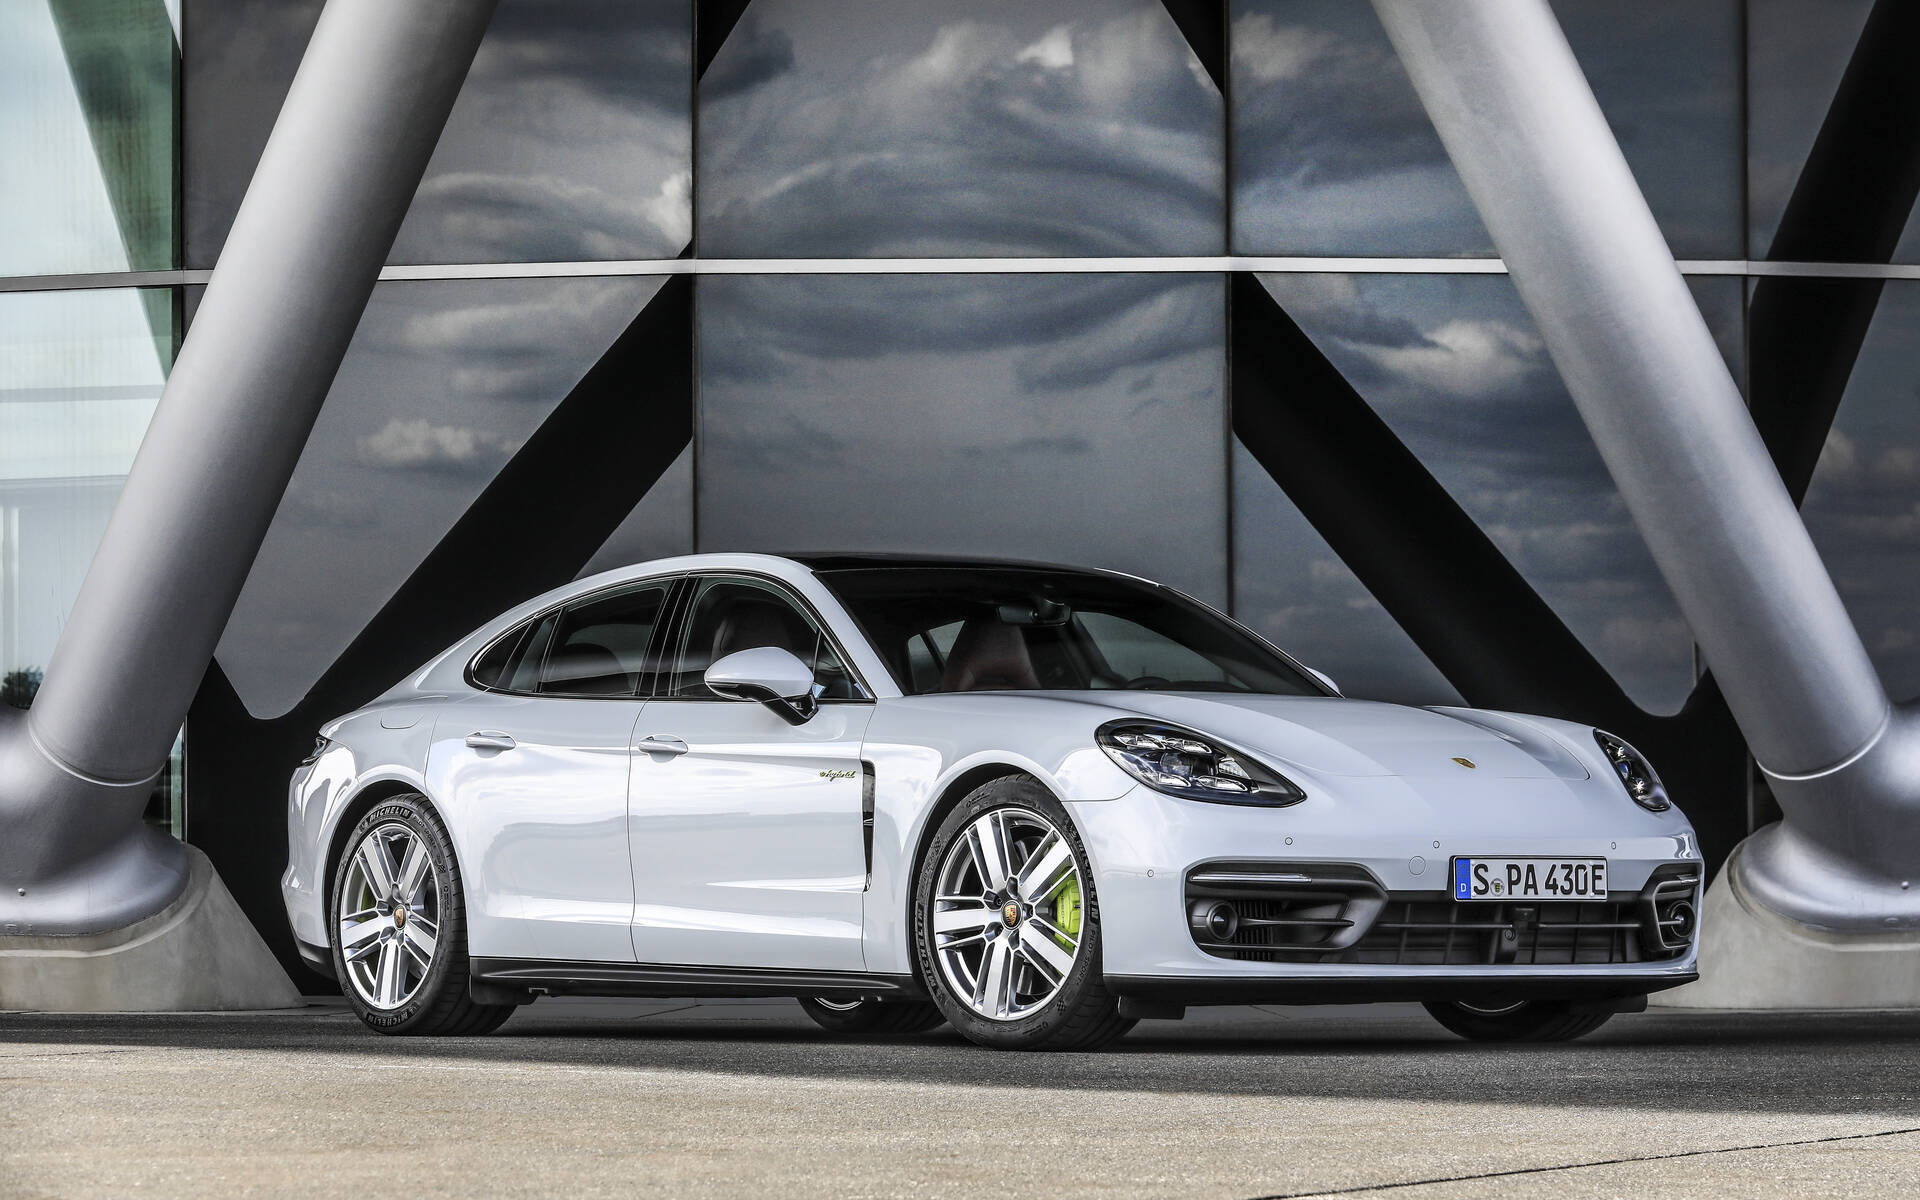 Porsche Panamera Review 2024, Performance & Pricing